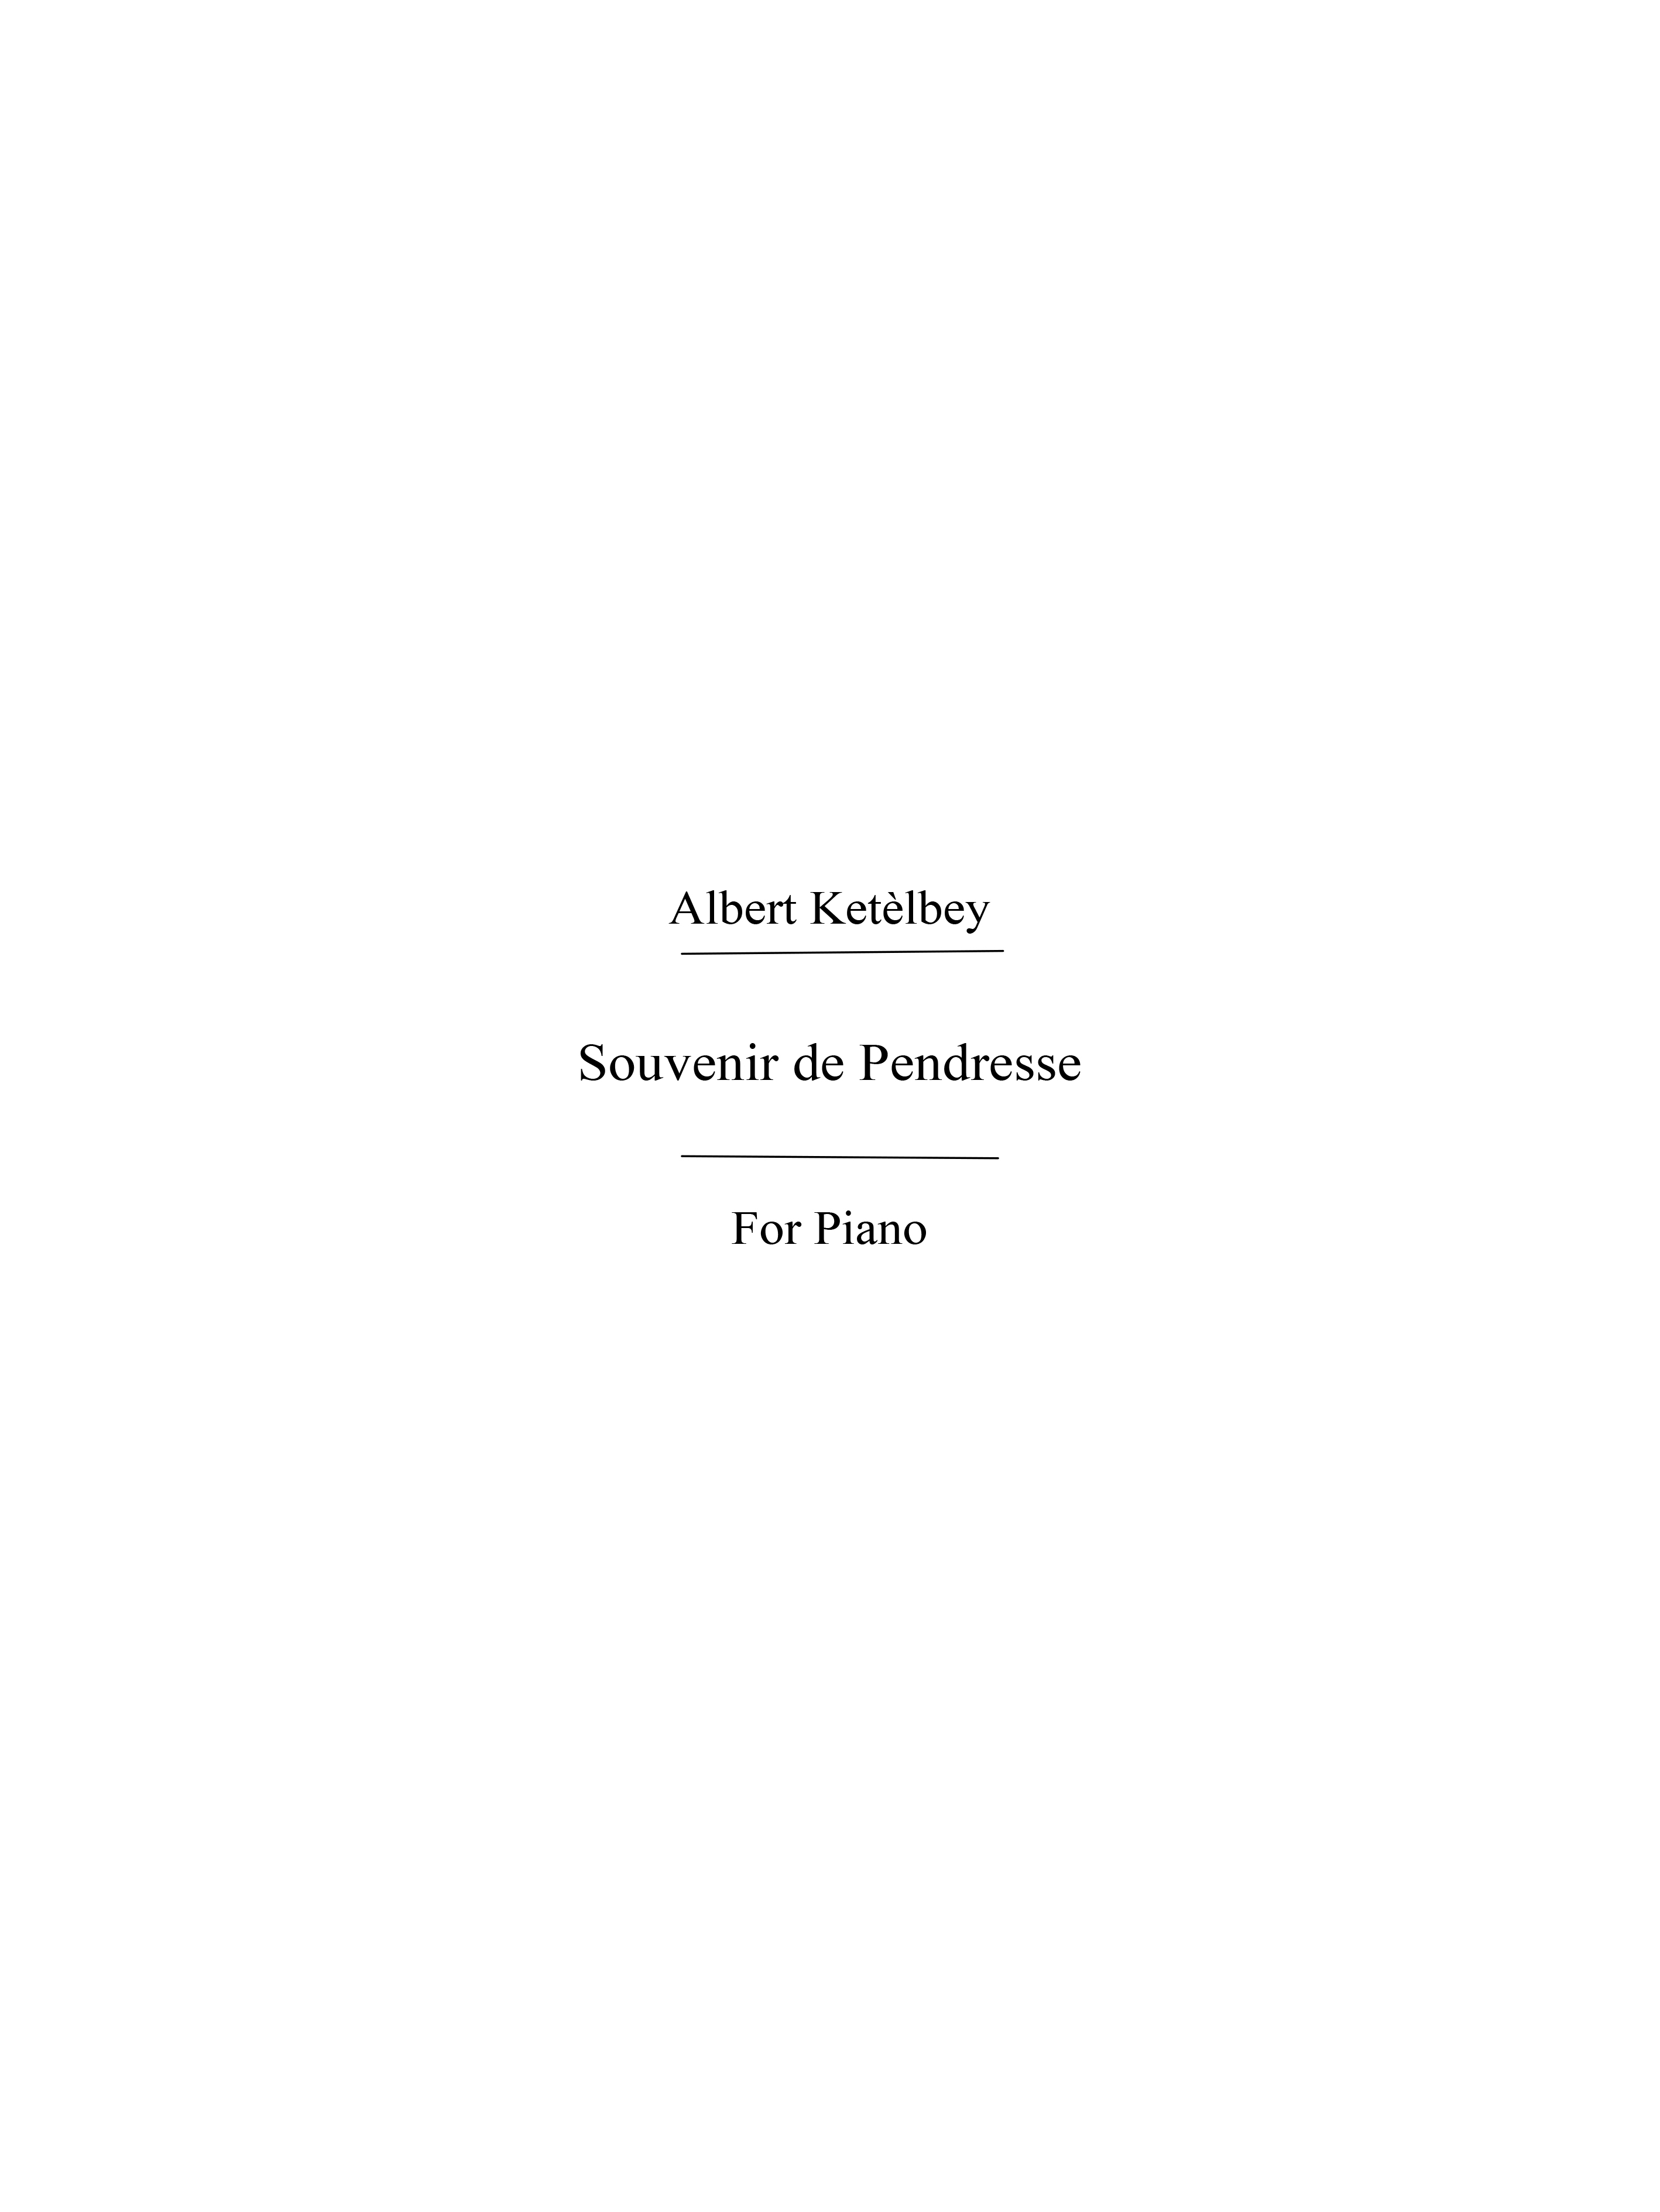 Albert Ketlbey: Souvenir De Tendresse: Piano: Instrumental Work